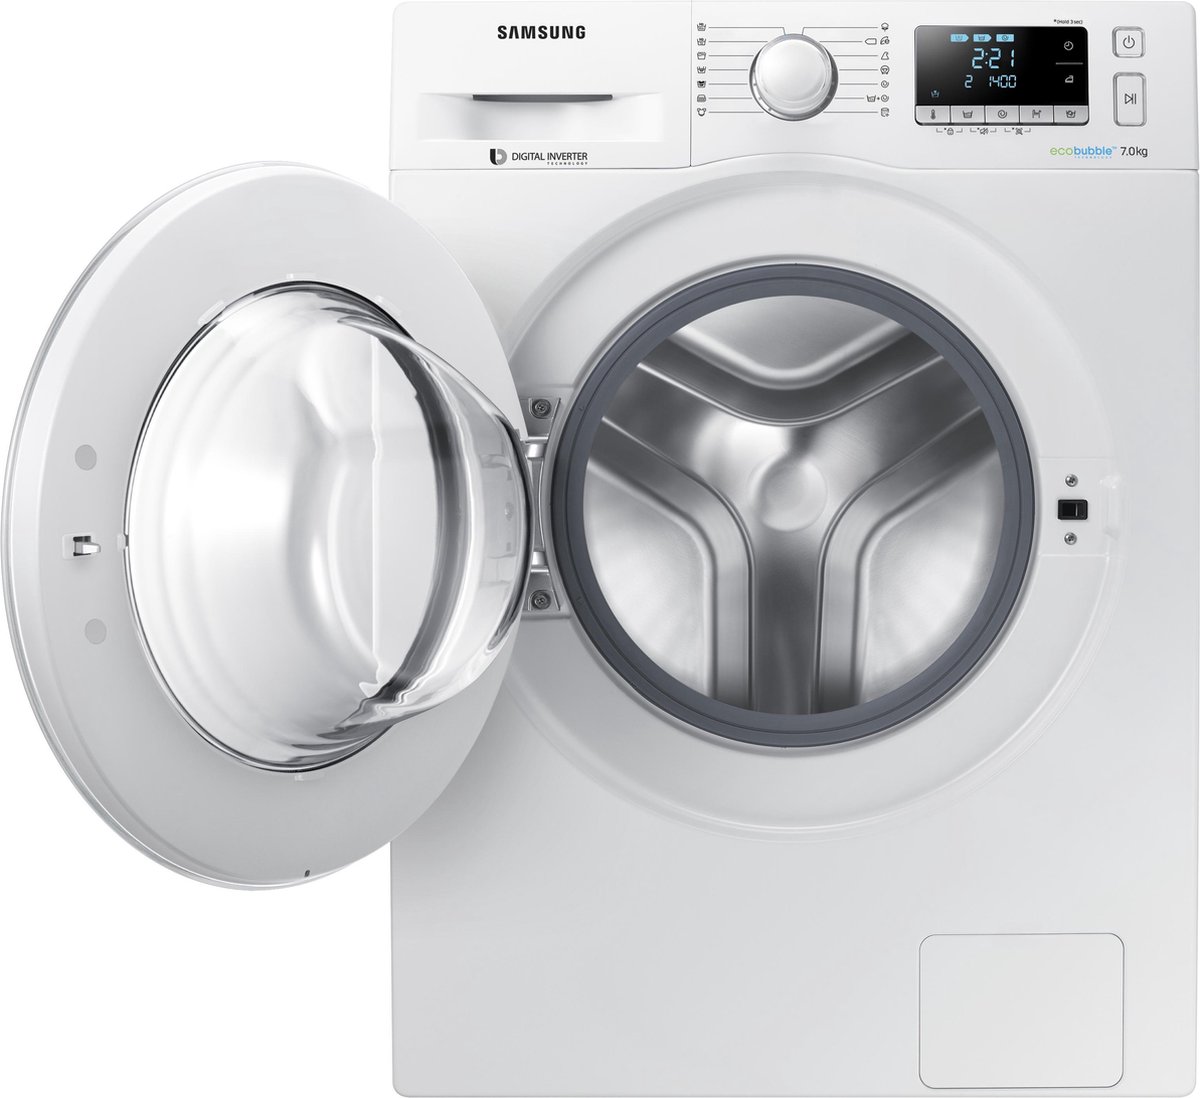 Samsung - Eco Bubble - Wasmachine | bol.com